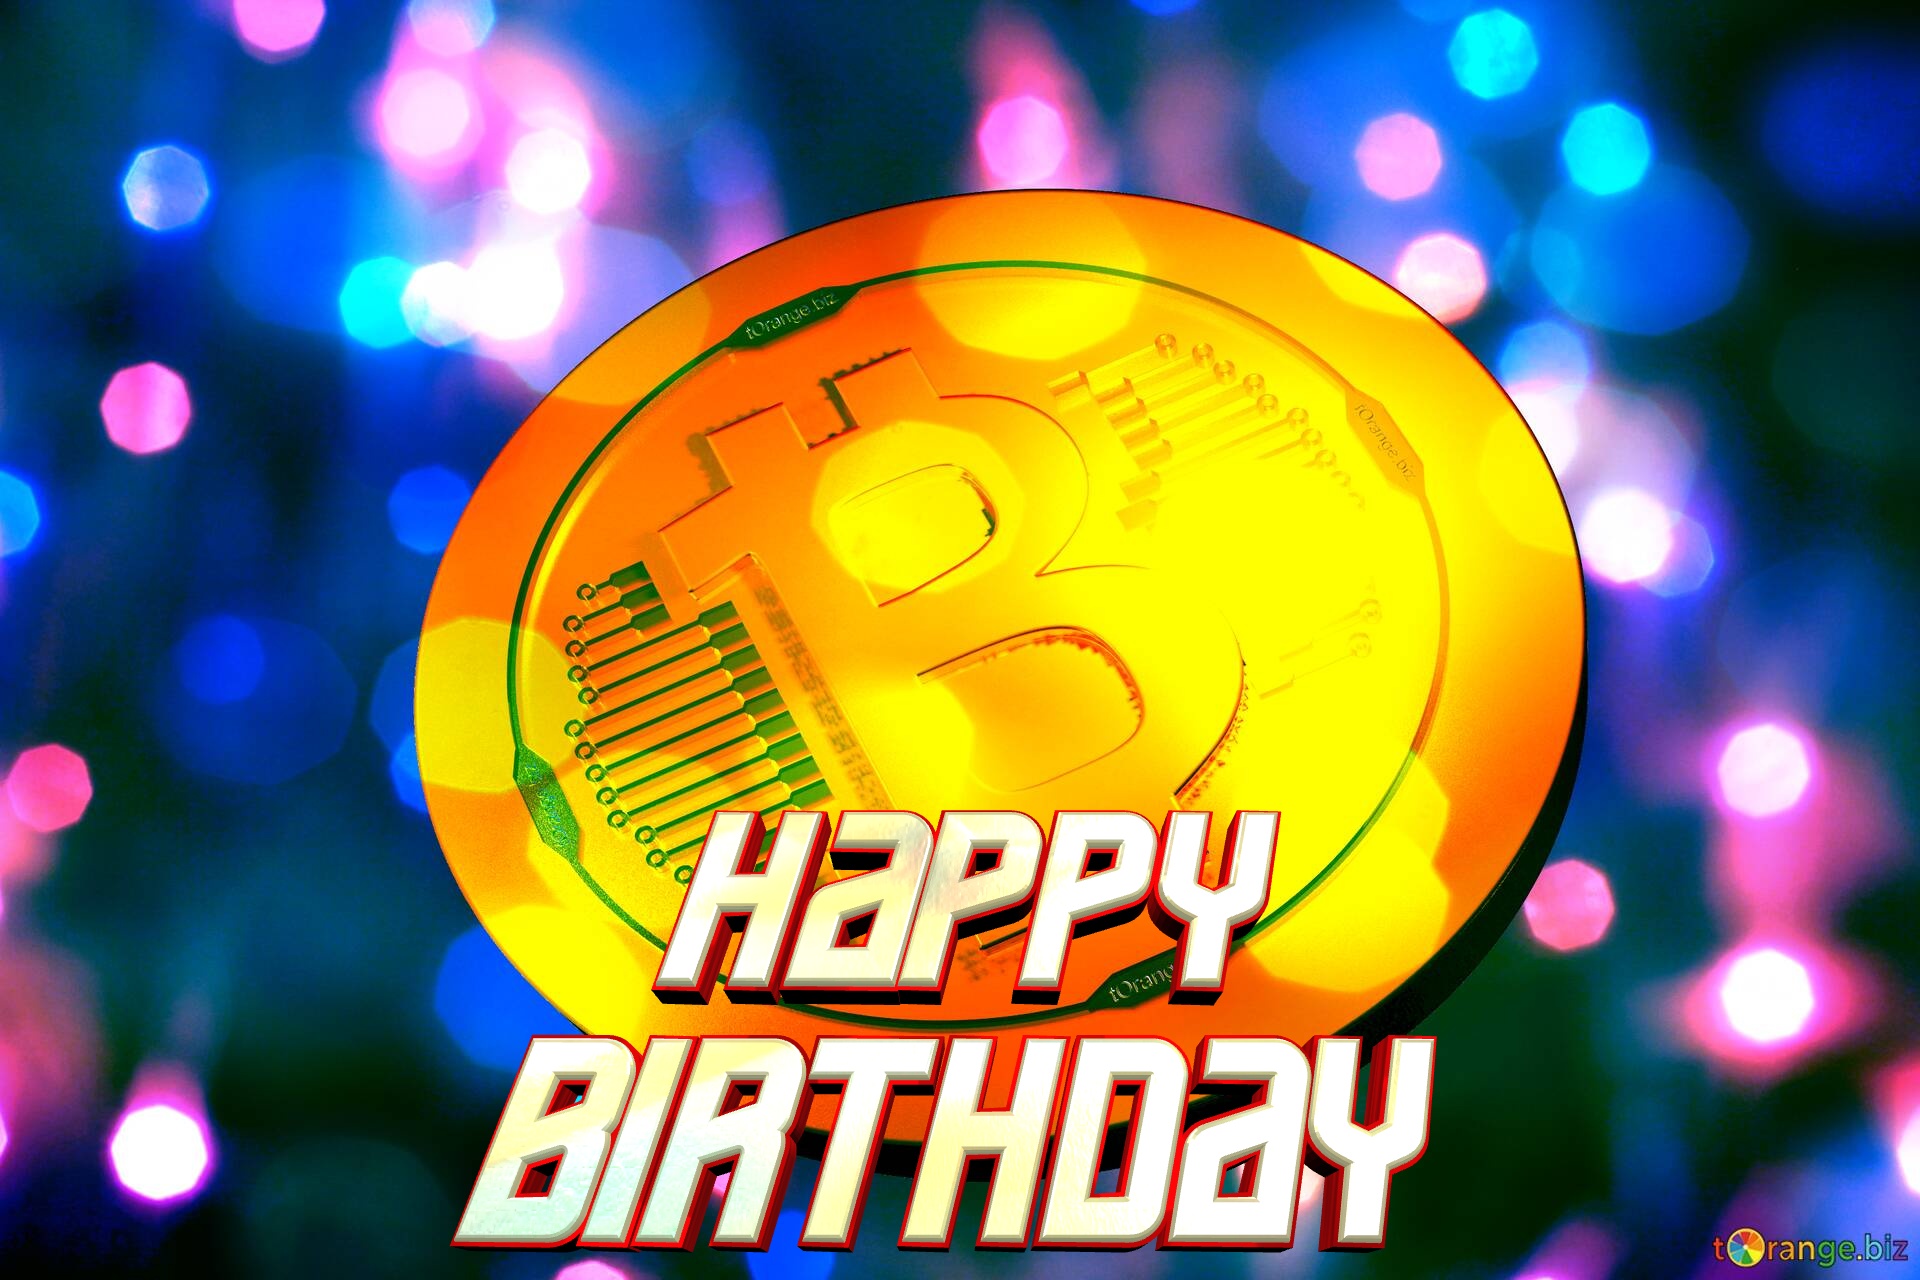 Happy Birthday! Bitcoin Background. Bitcoin background №0